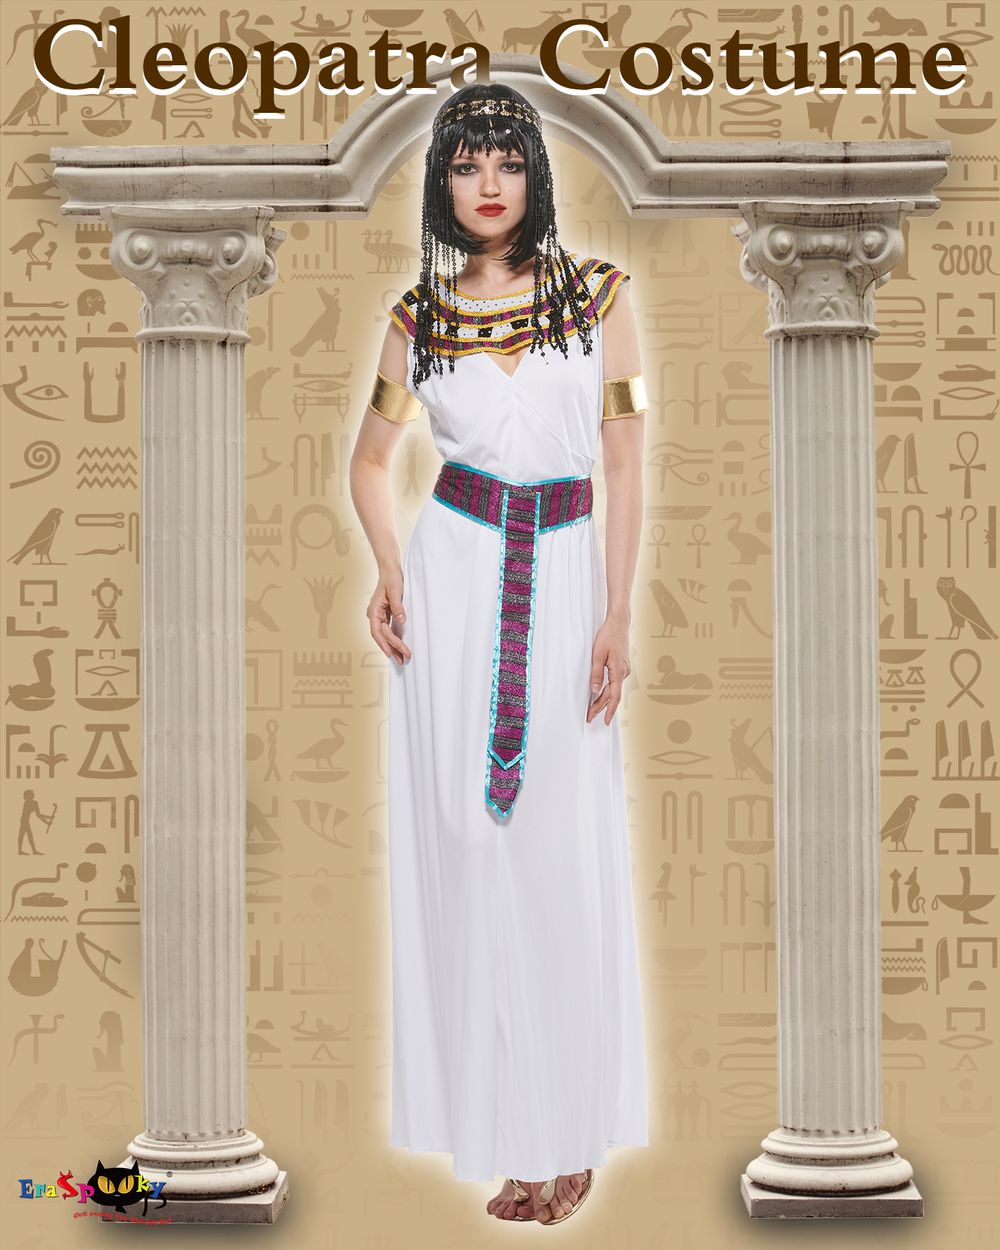 Eraspooky クレオパトラ女性コスチューム エジプト王女ファンシー ドレス